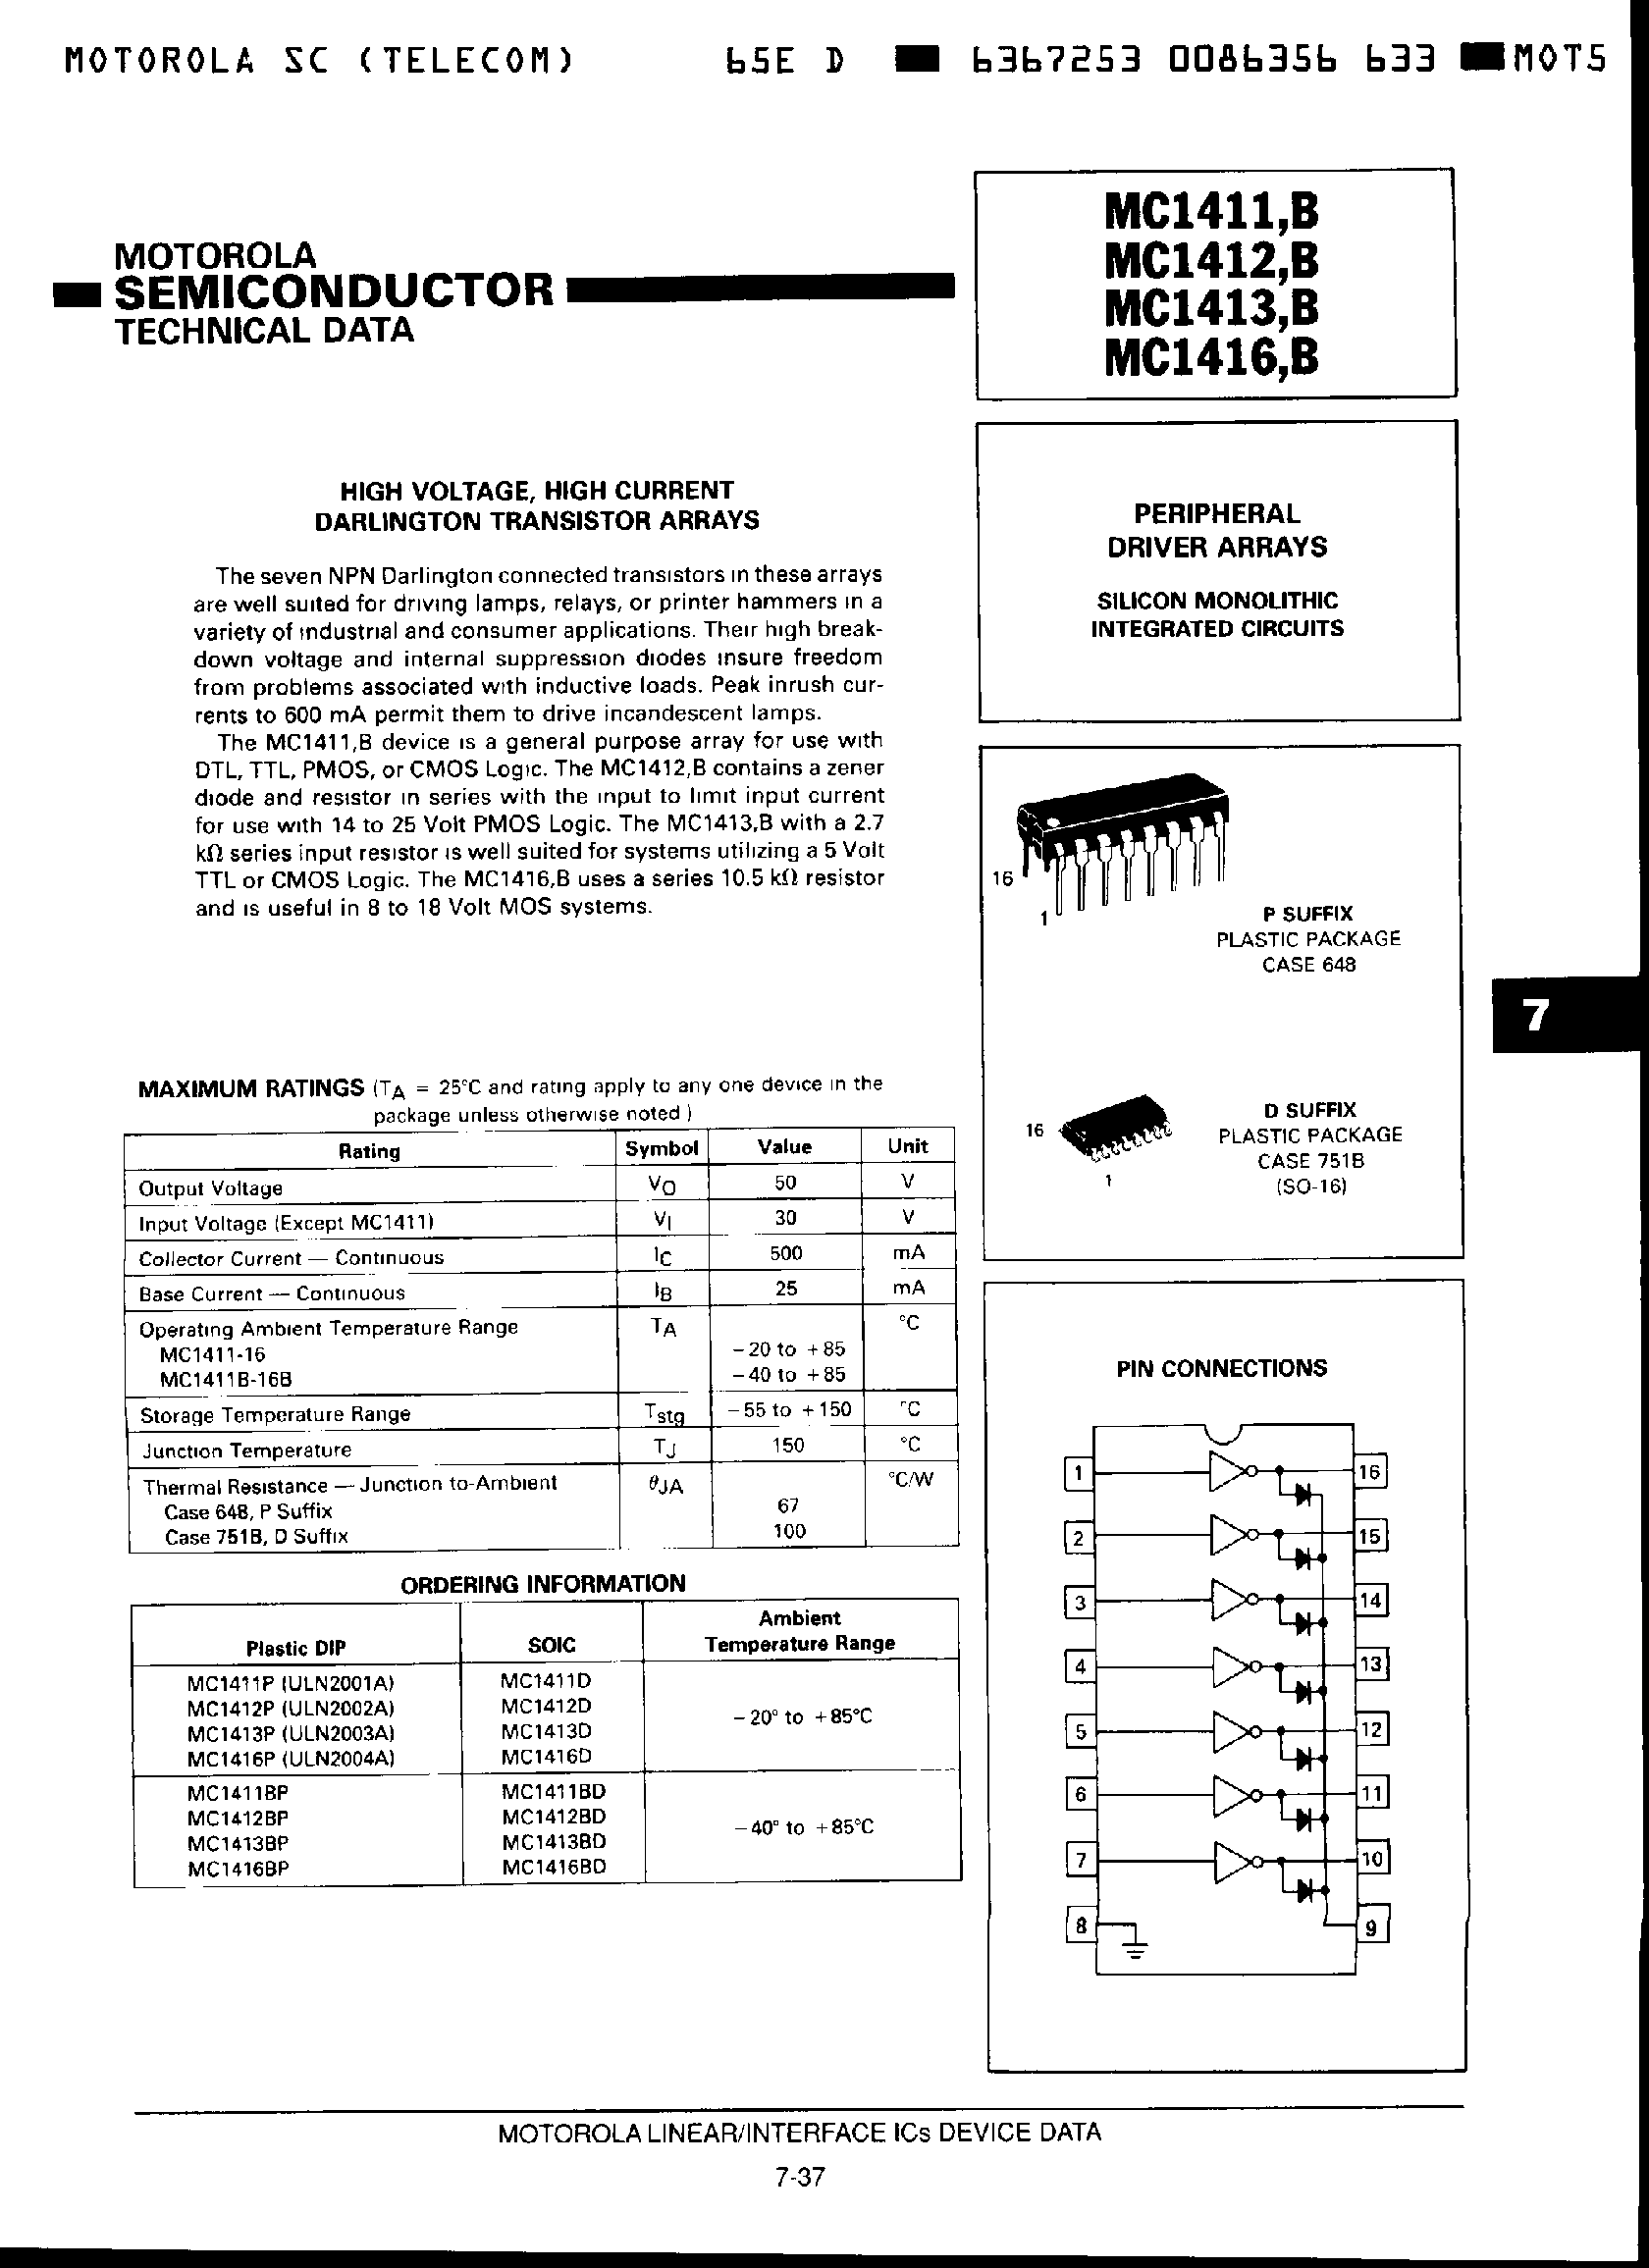 Datasheet MC1412BP - PERIPHERAL DRIVER ARRAYS page 1